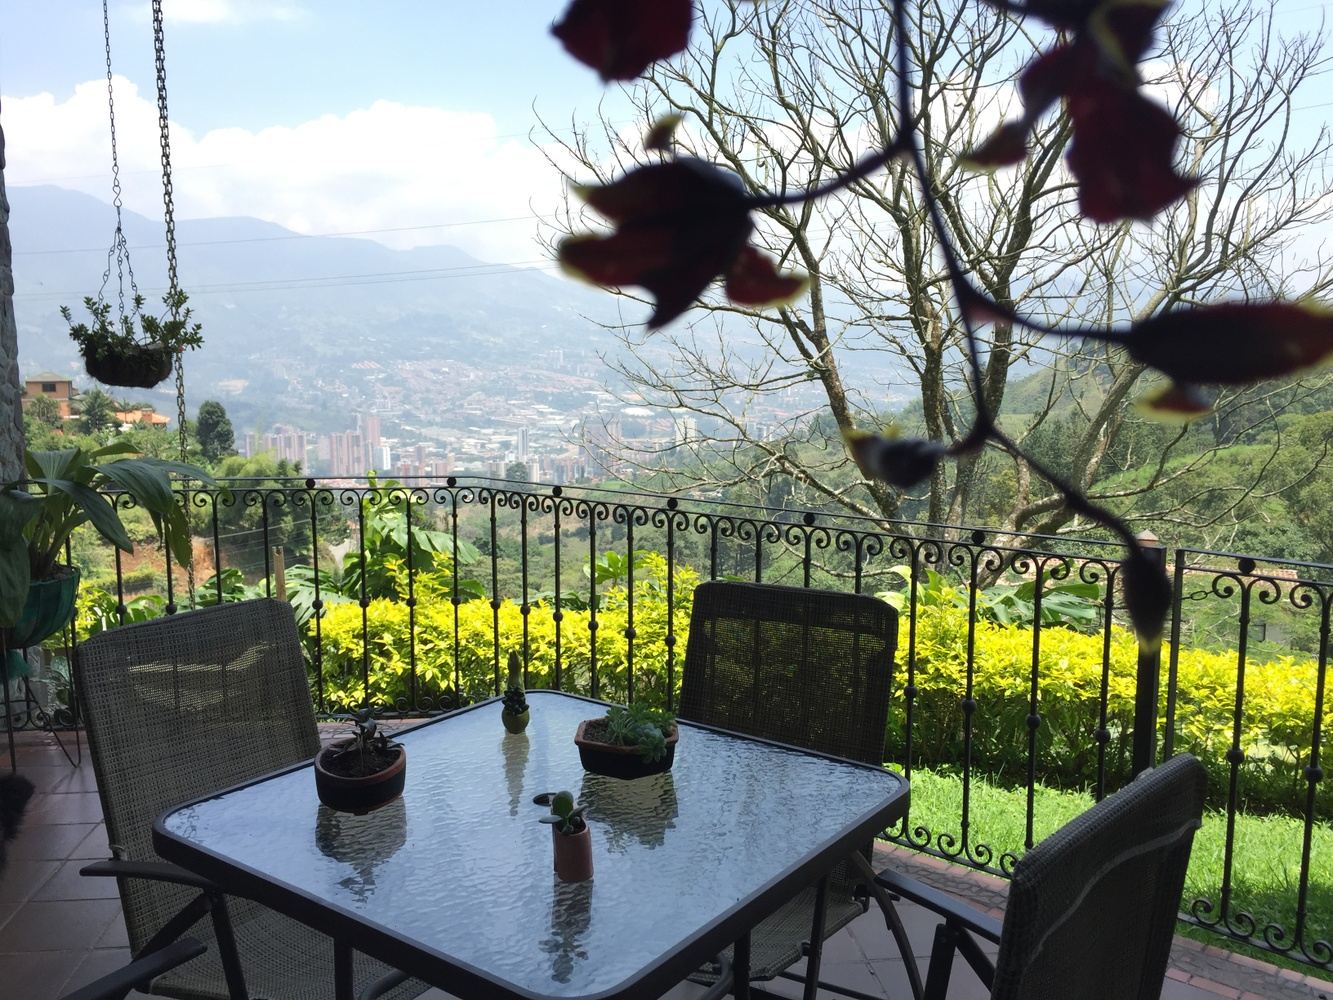 The Best Retirement Tour In Medellin